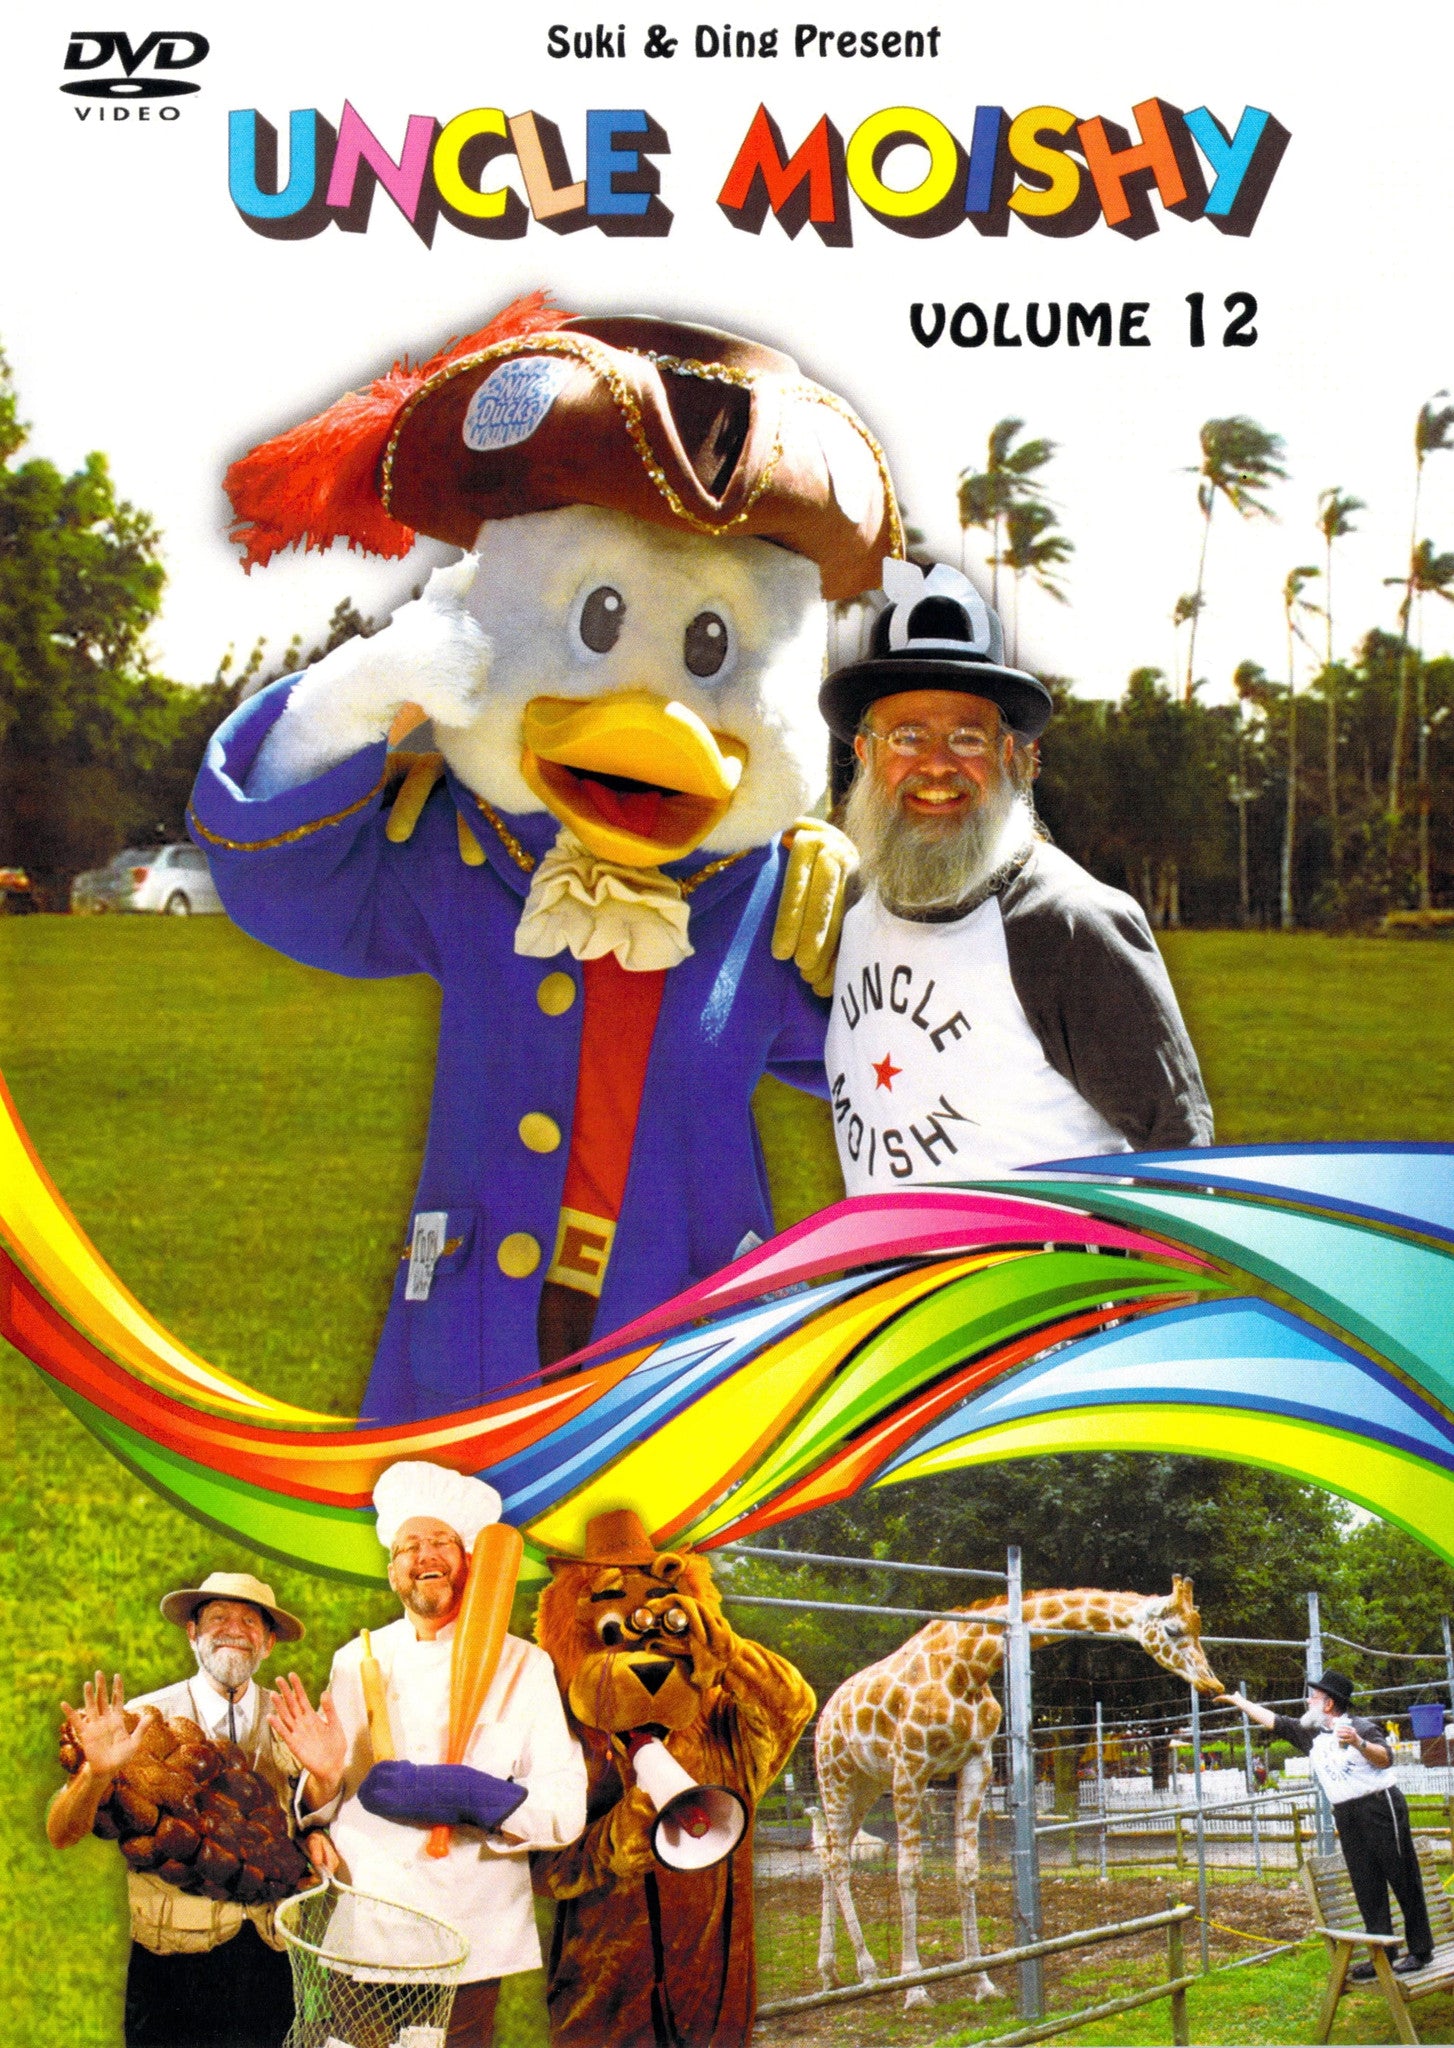 Uncle Moishy - DVD Vol 12